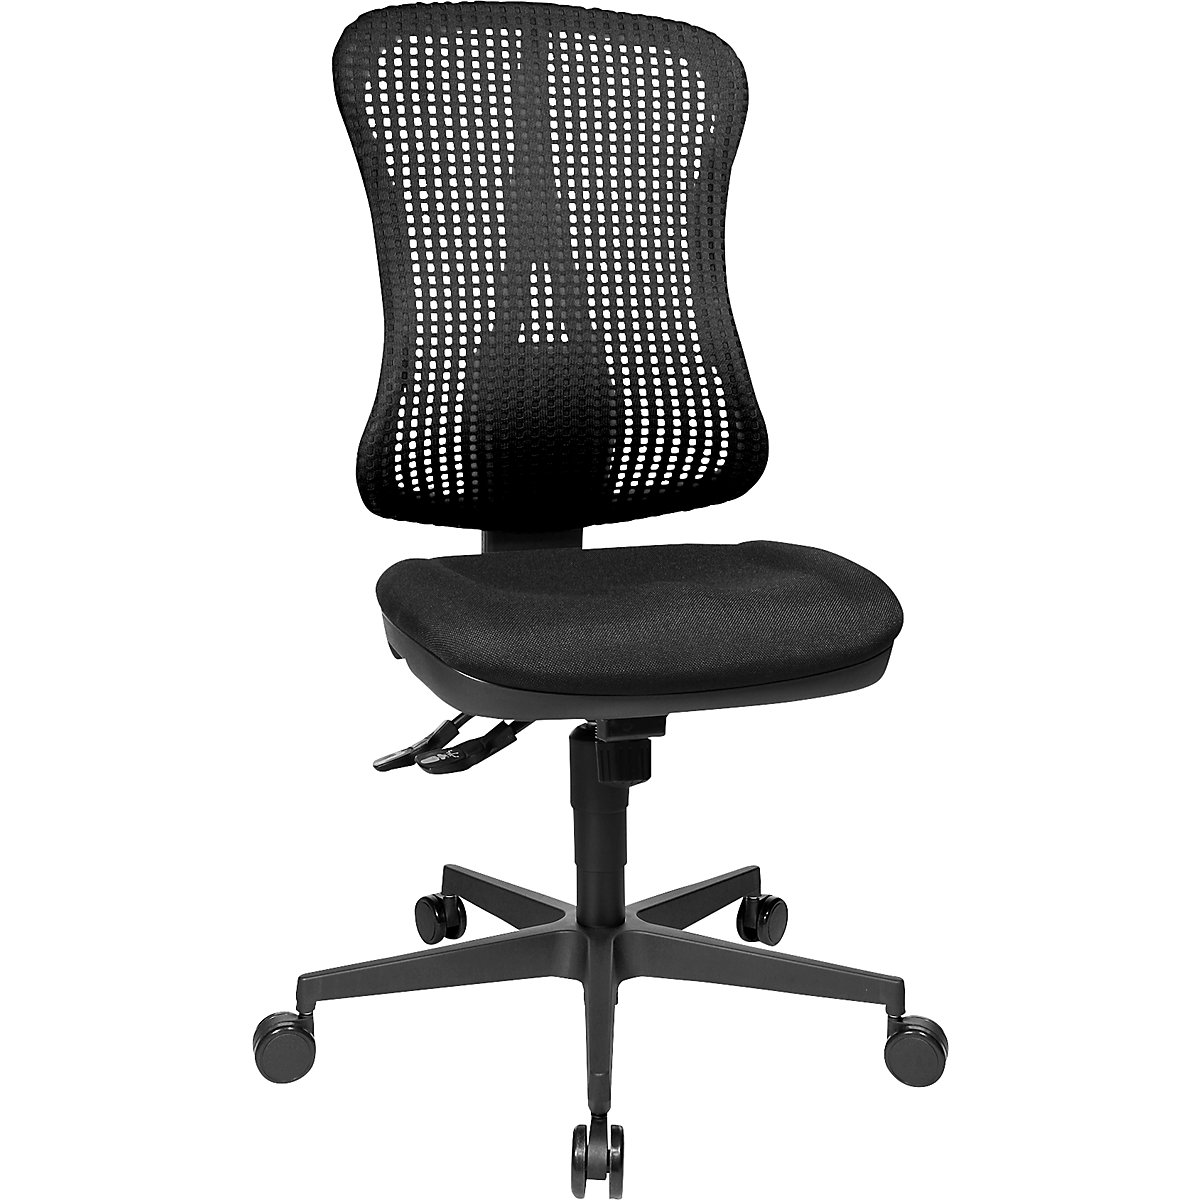 Ergonomic swivel chair, contoured seat – Topstar